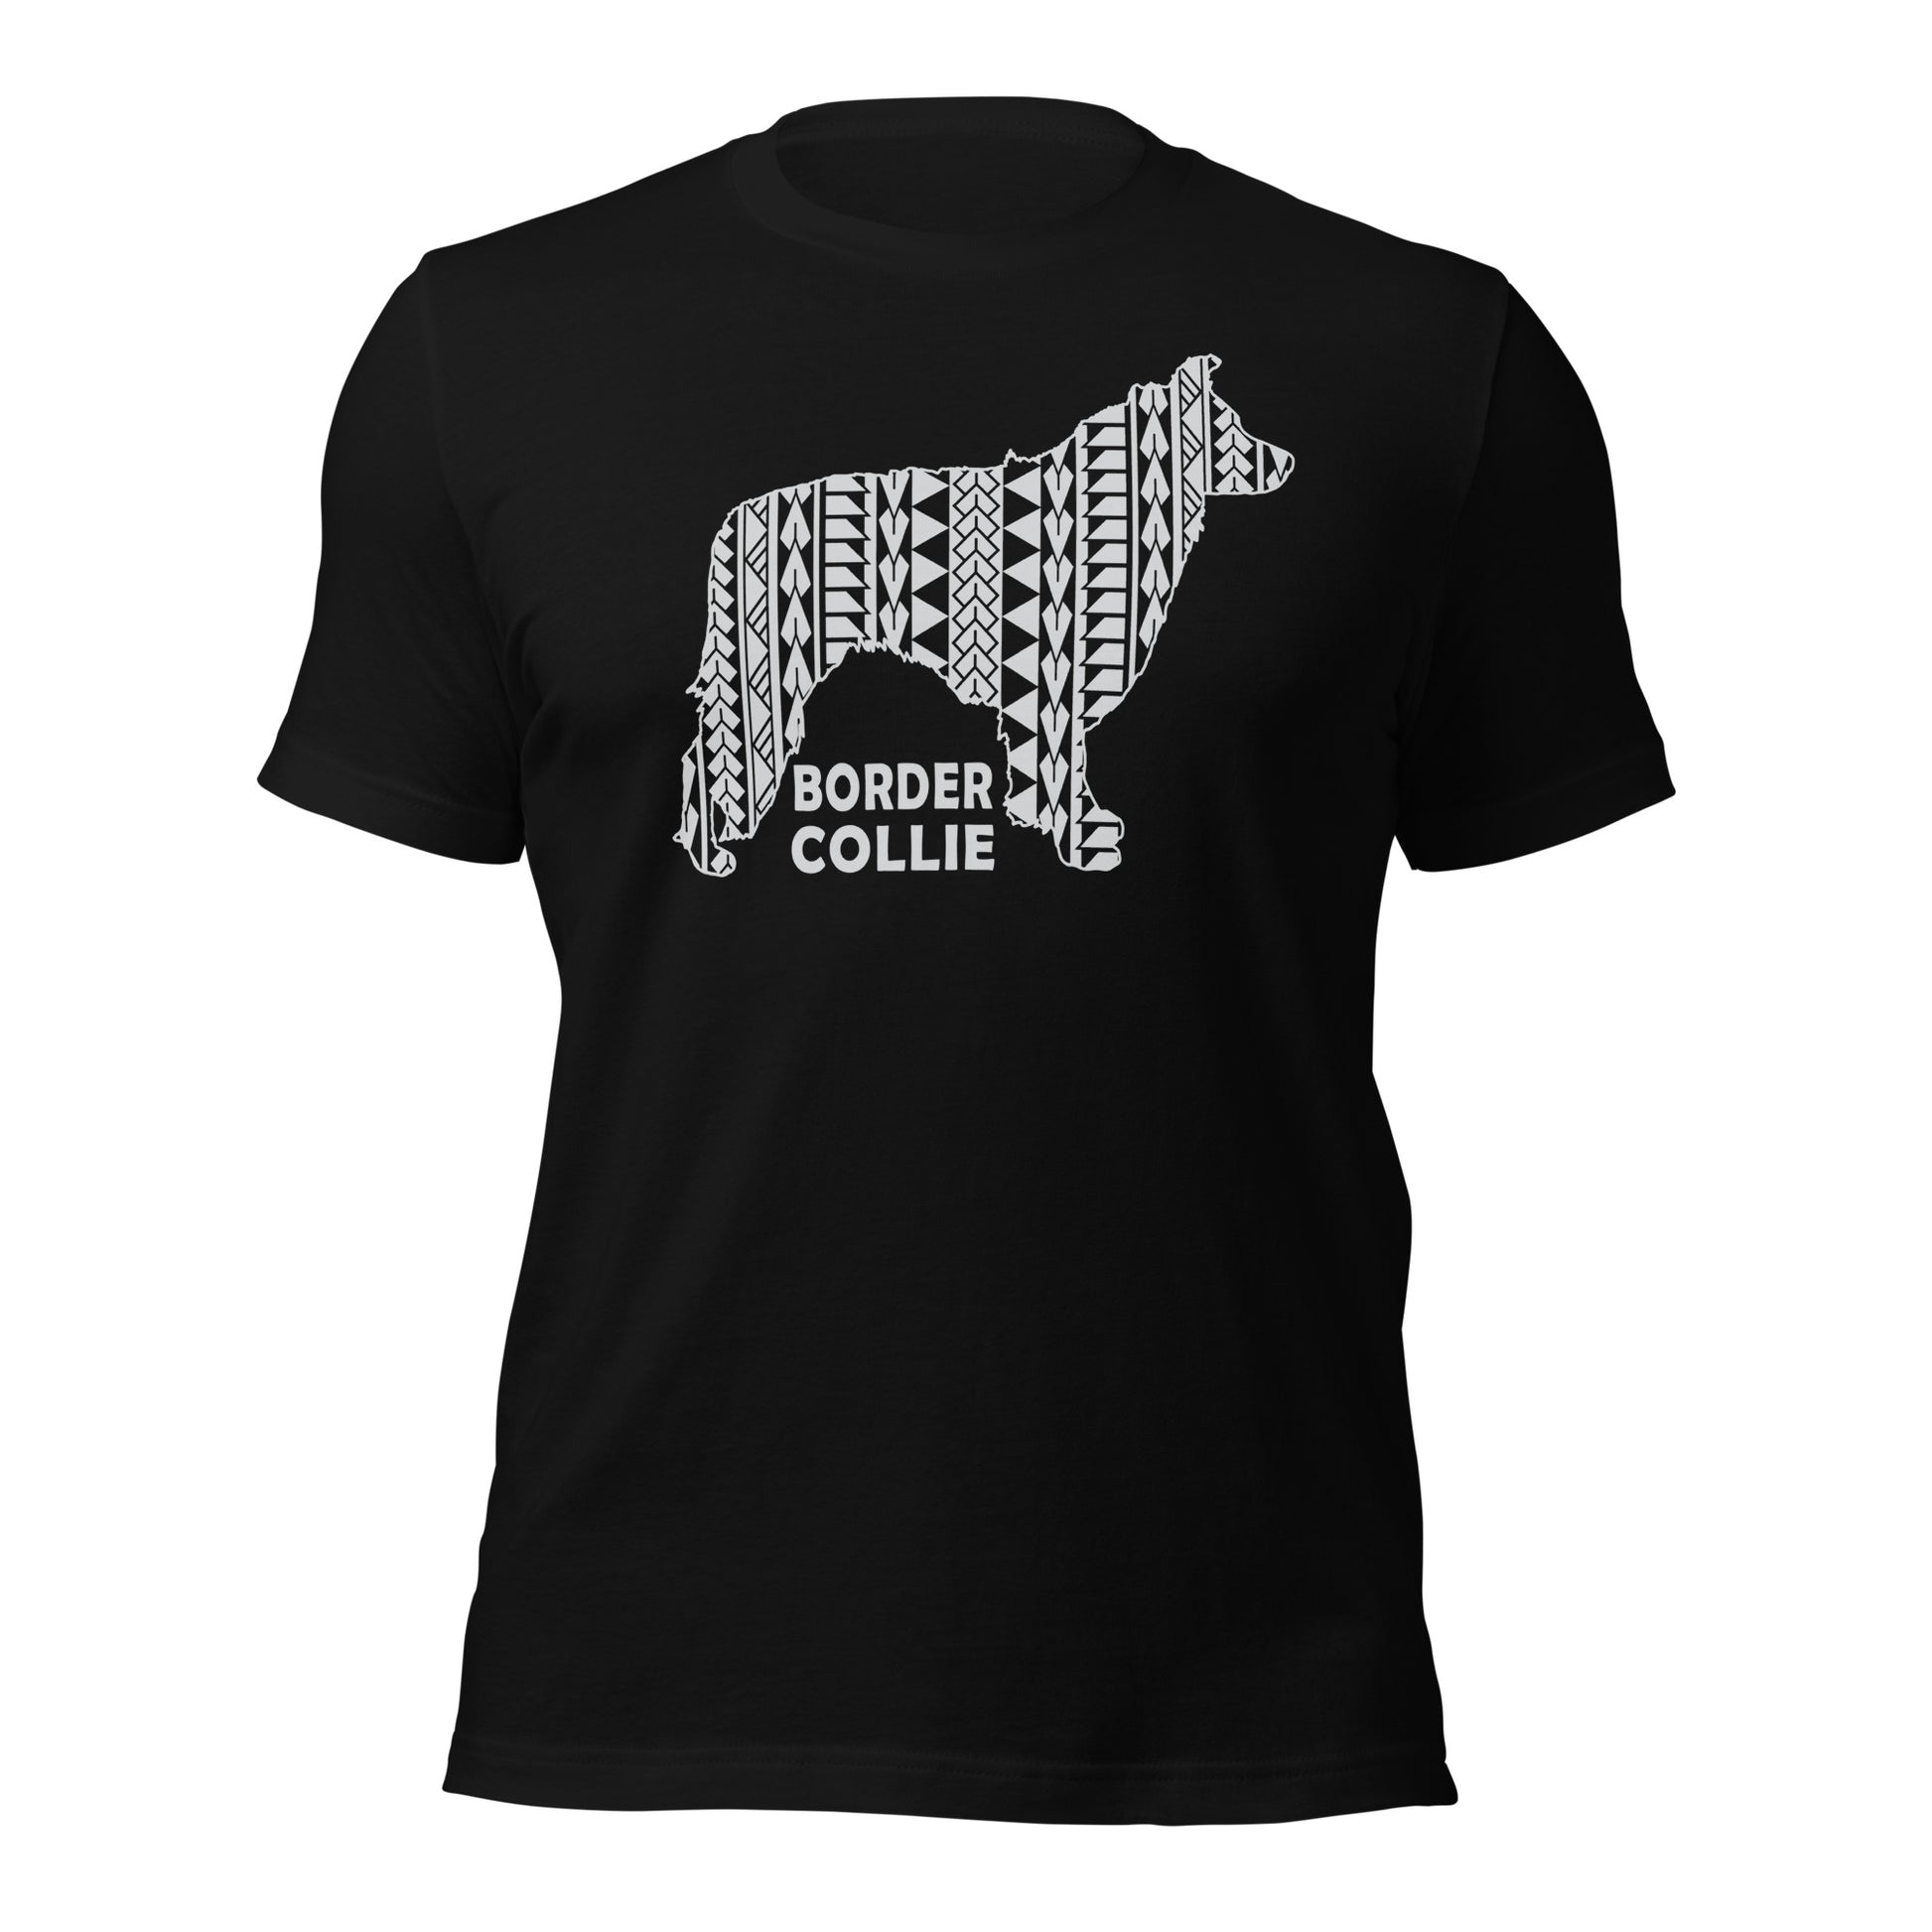 Border Collie Polynesian t-shirt black by Dog Artistry.